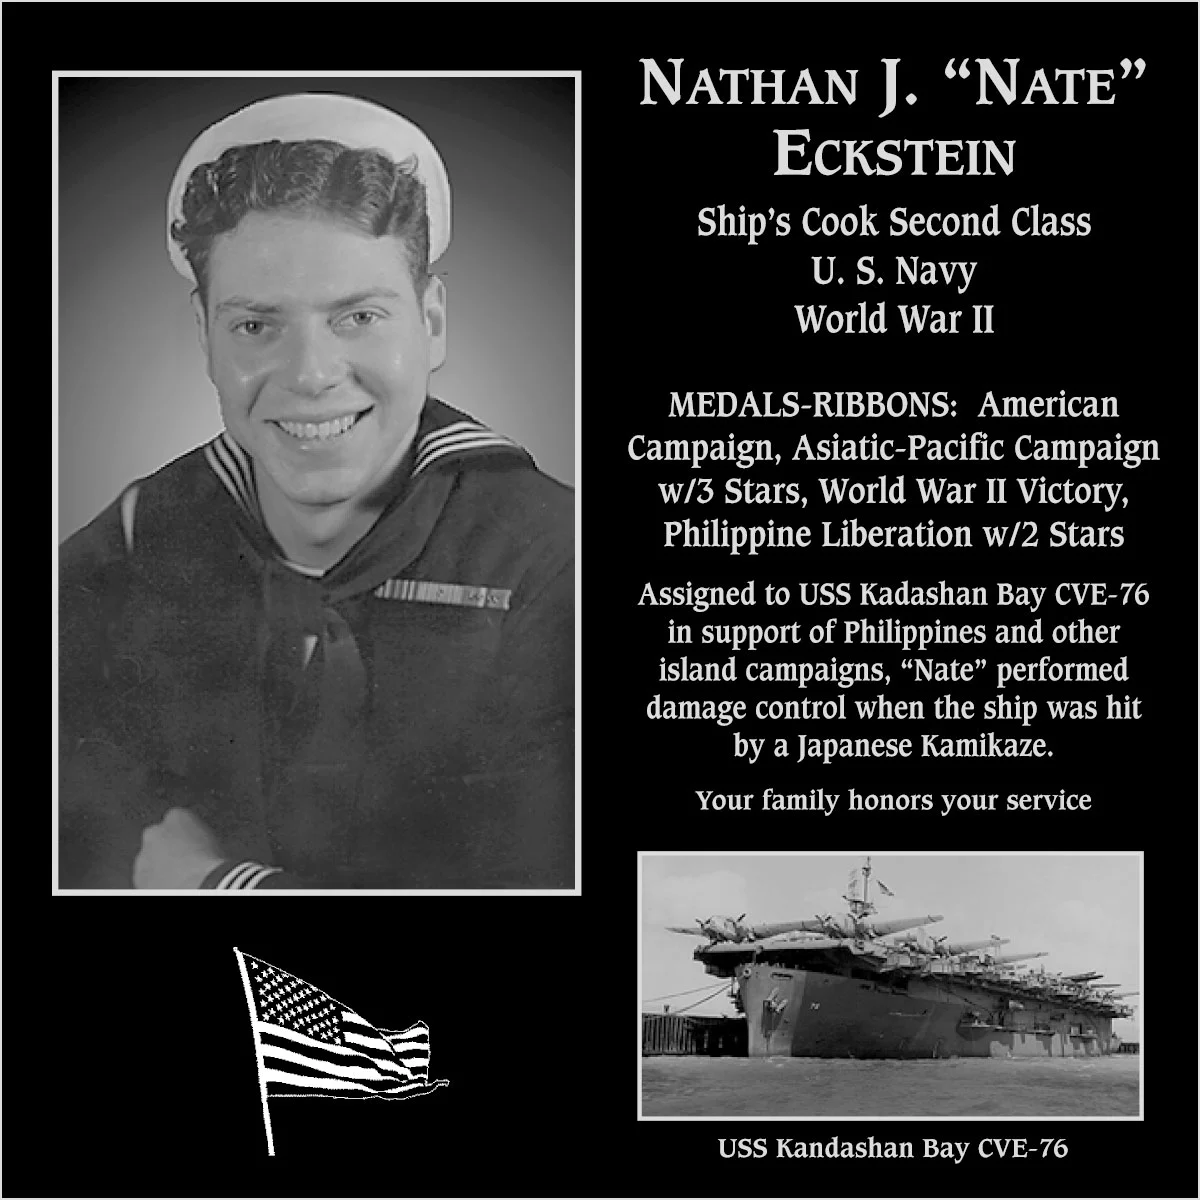 Nathan J “Nate” Eckstein